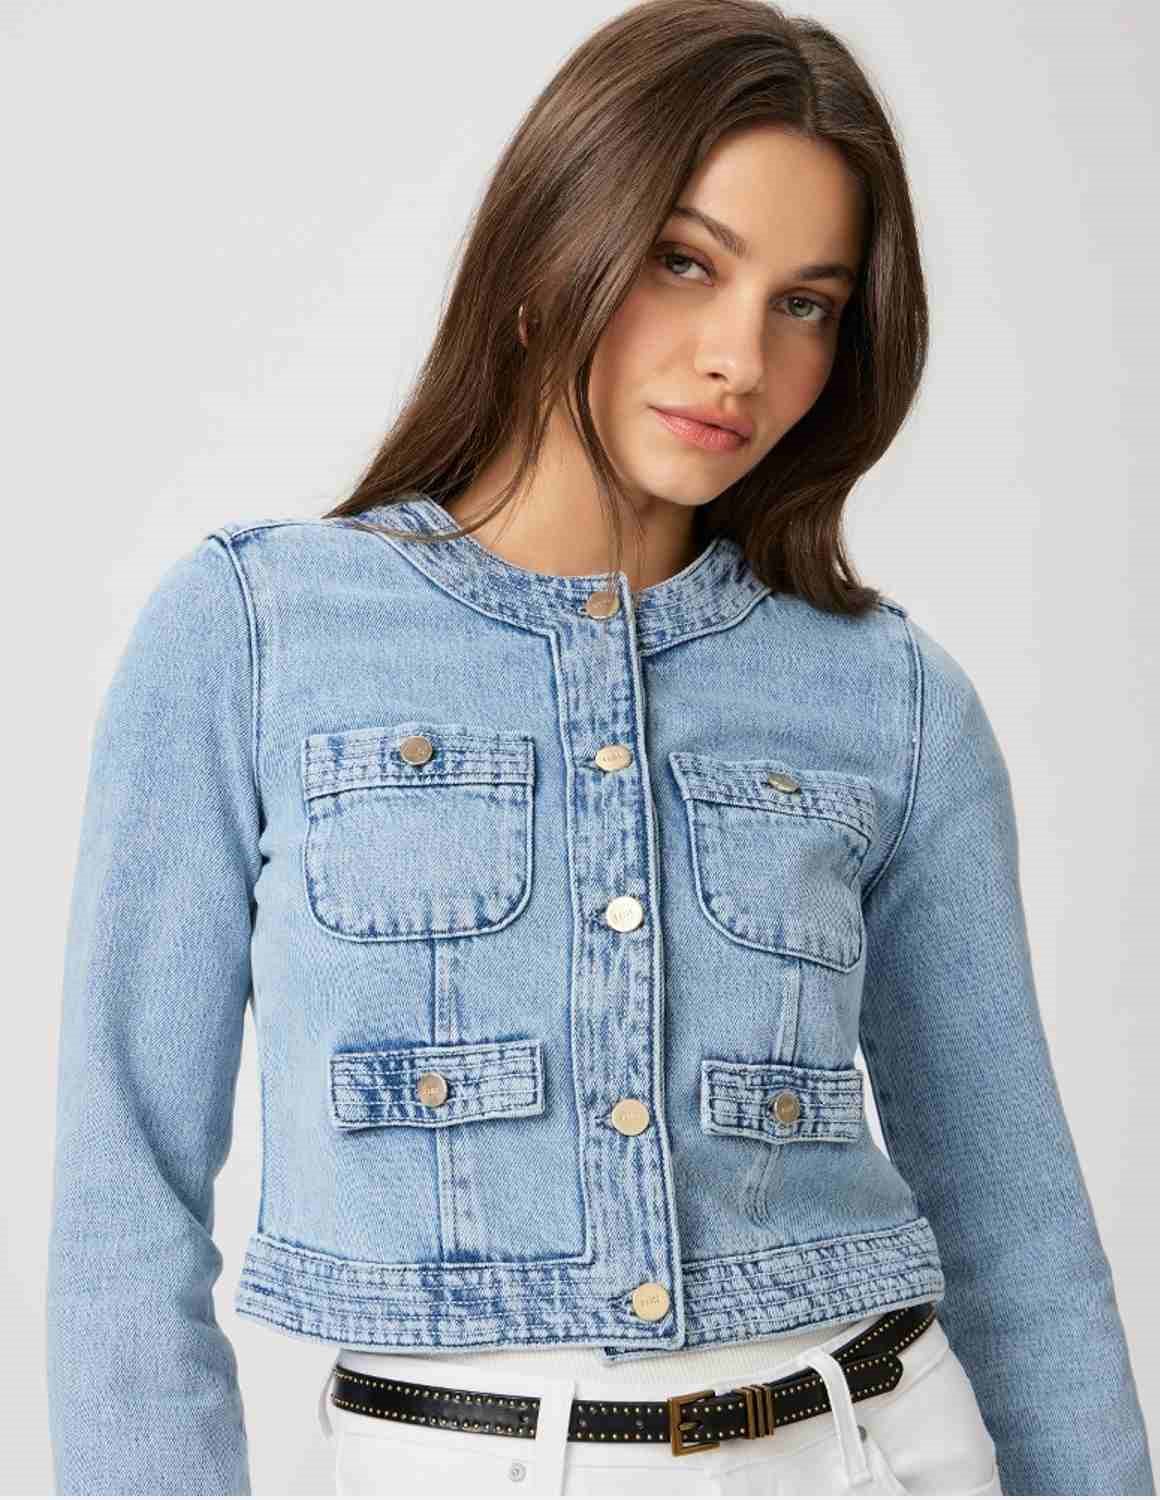 Kiya jacket by Paige Jeans